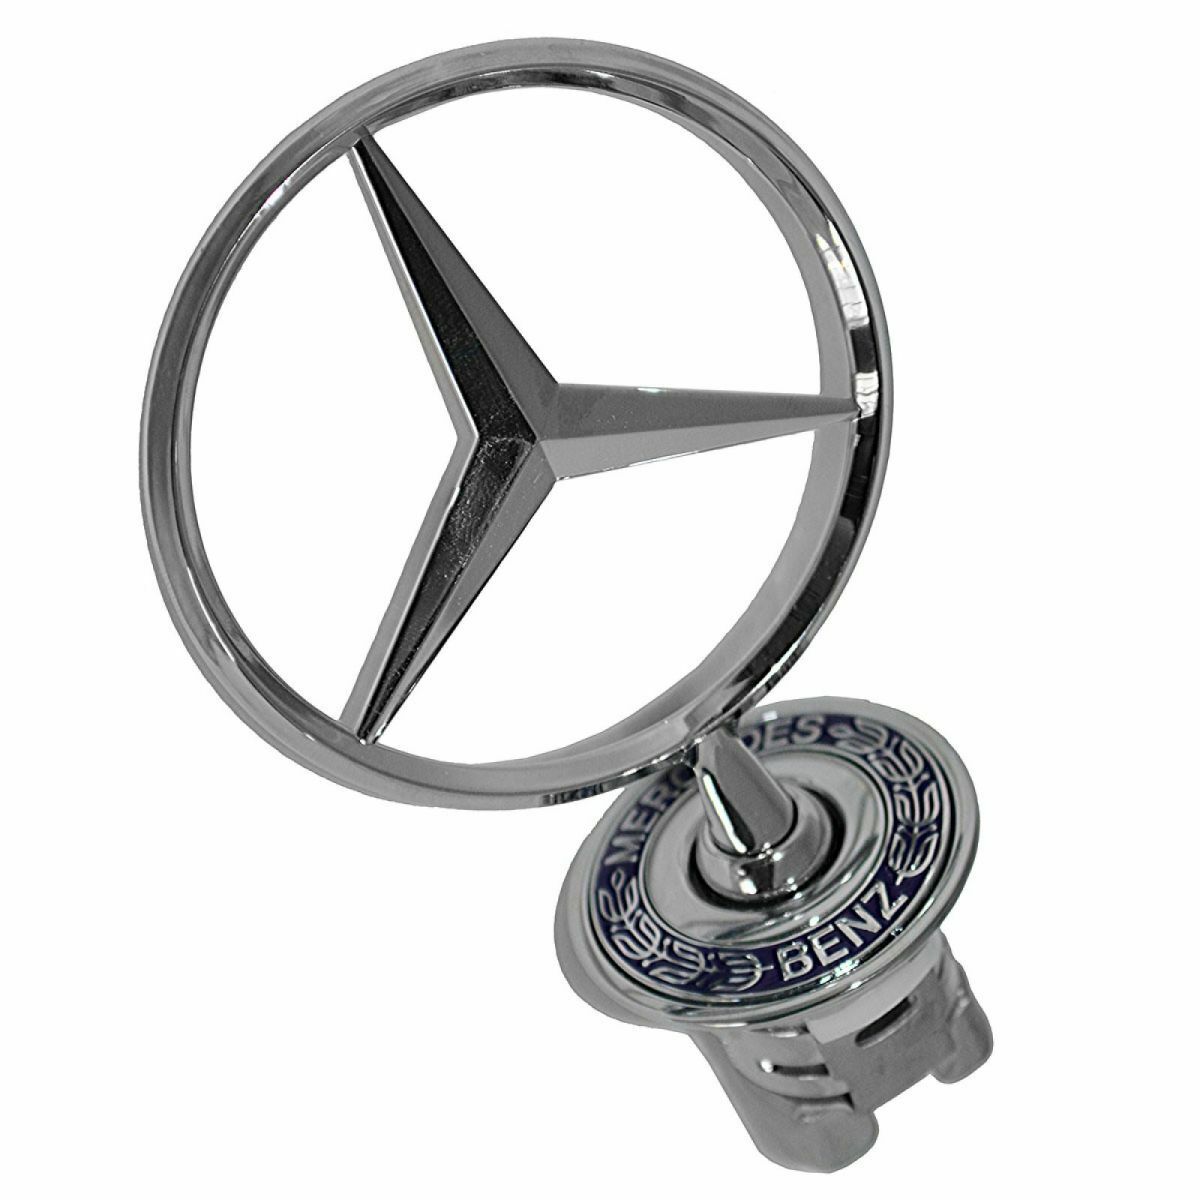 Mercedes Benz Hood Ornament for 300E C280 C230 CLK320 E320 E420 S500